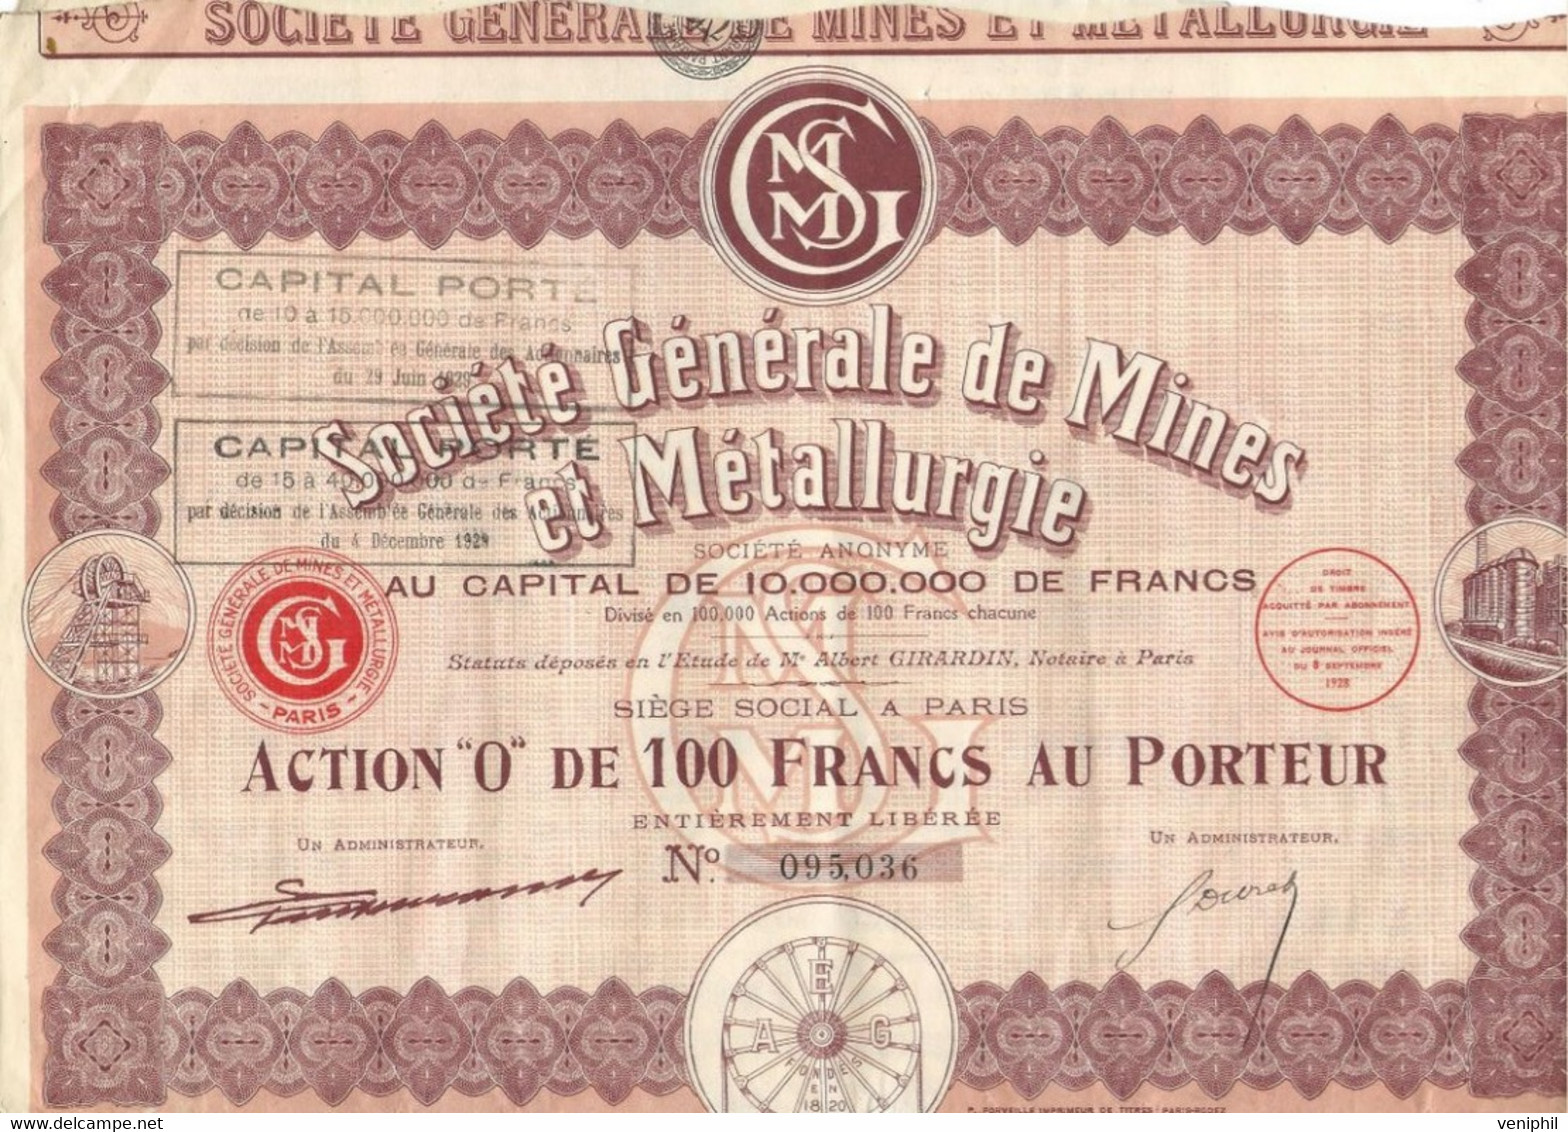 SOCIETE GENERALE DE MINES ET METALLURGIE -ACTION" 0 " DE 100 FRS -ANNEE 1928 - Bergbau